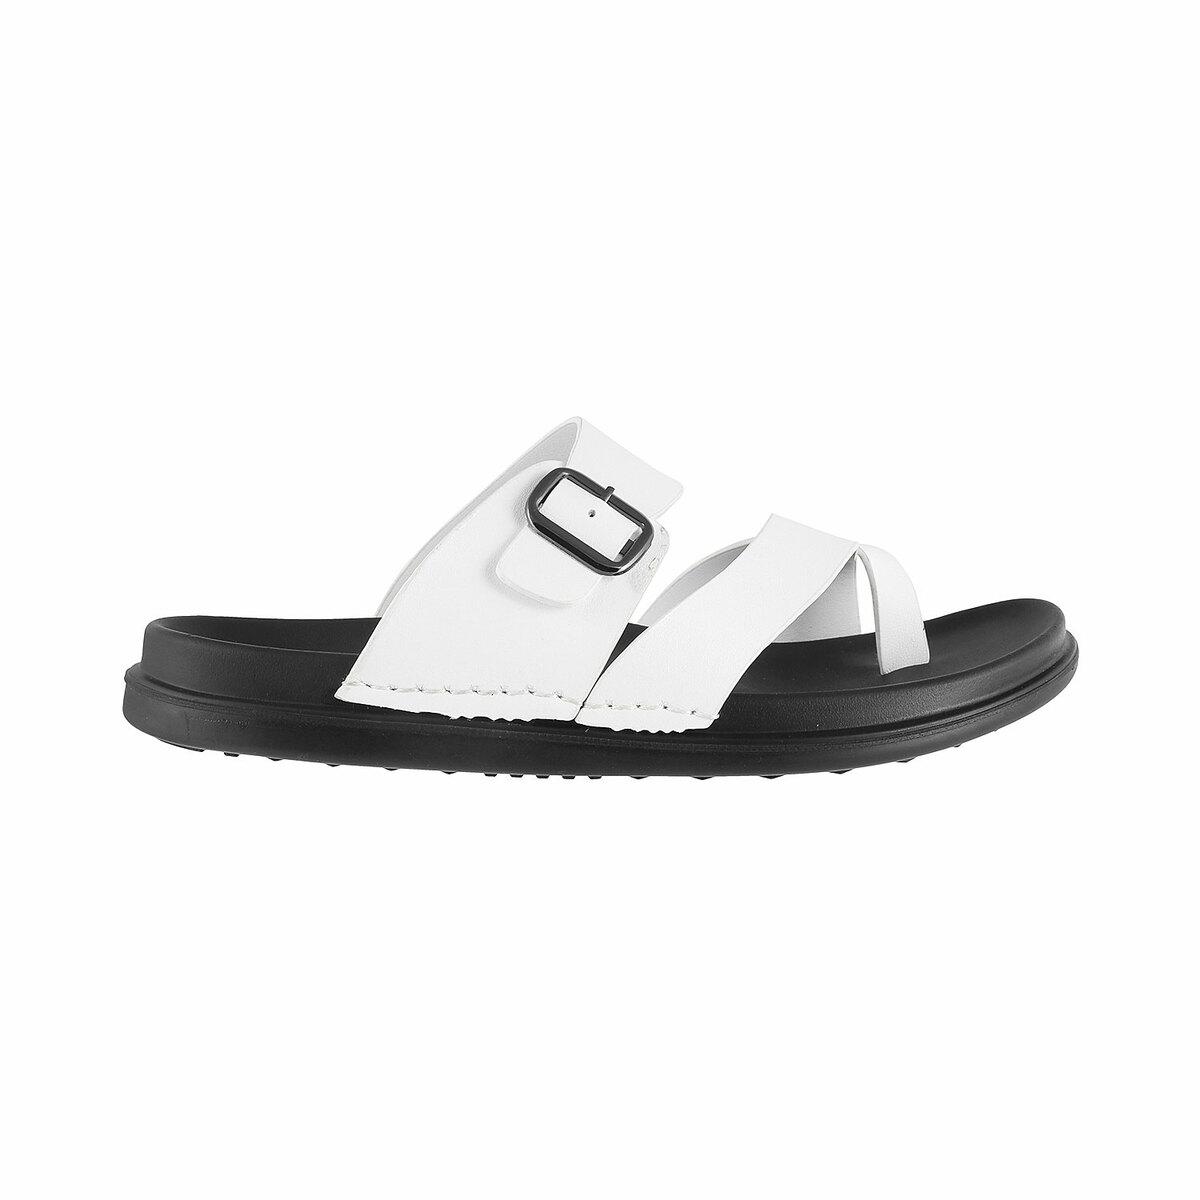 Buy Men White Casual Slippers Online | SKU: 60-9946-16-42-Metro Shoes